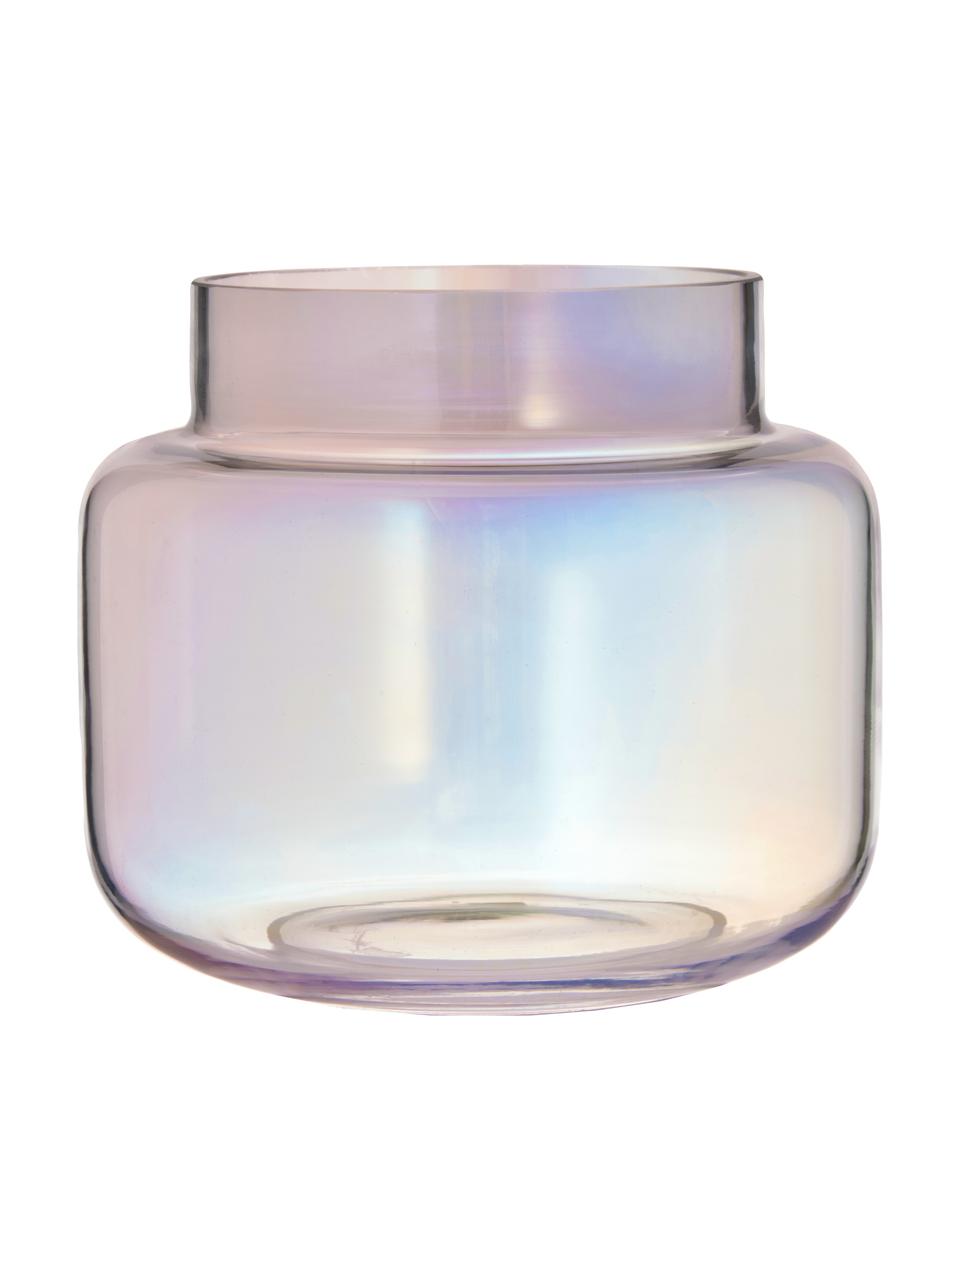 Glas-Vase Lasse, medium, Glas, Mehrfarbig, Ø 16 x H 14 cm